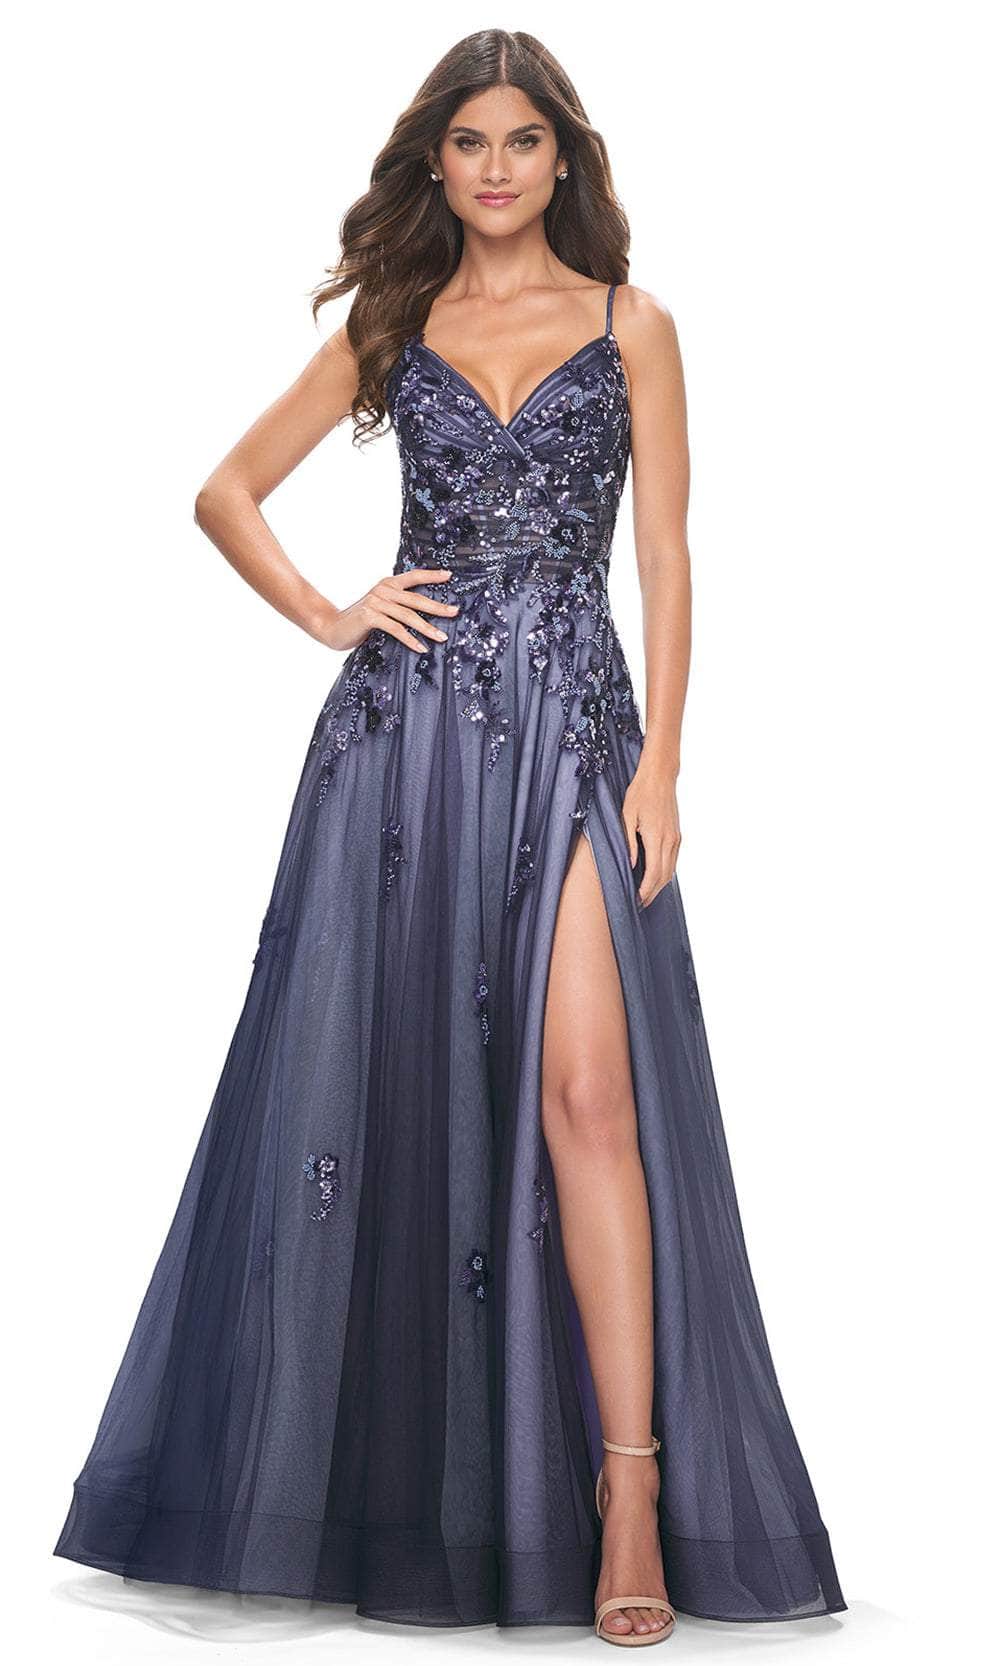 Image of La Femme 32185 - Sequin Embellished A-Line Prom Gown